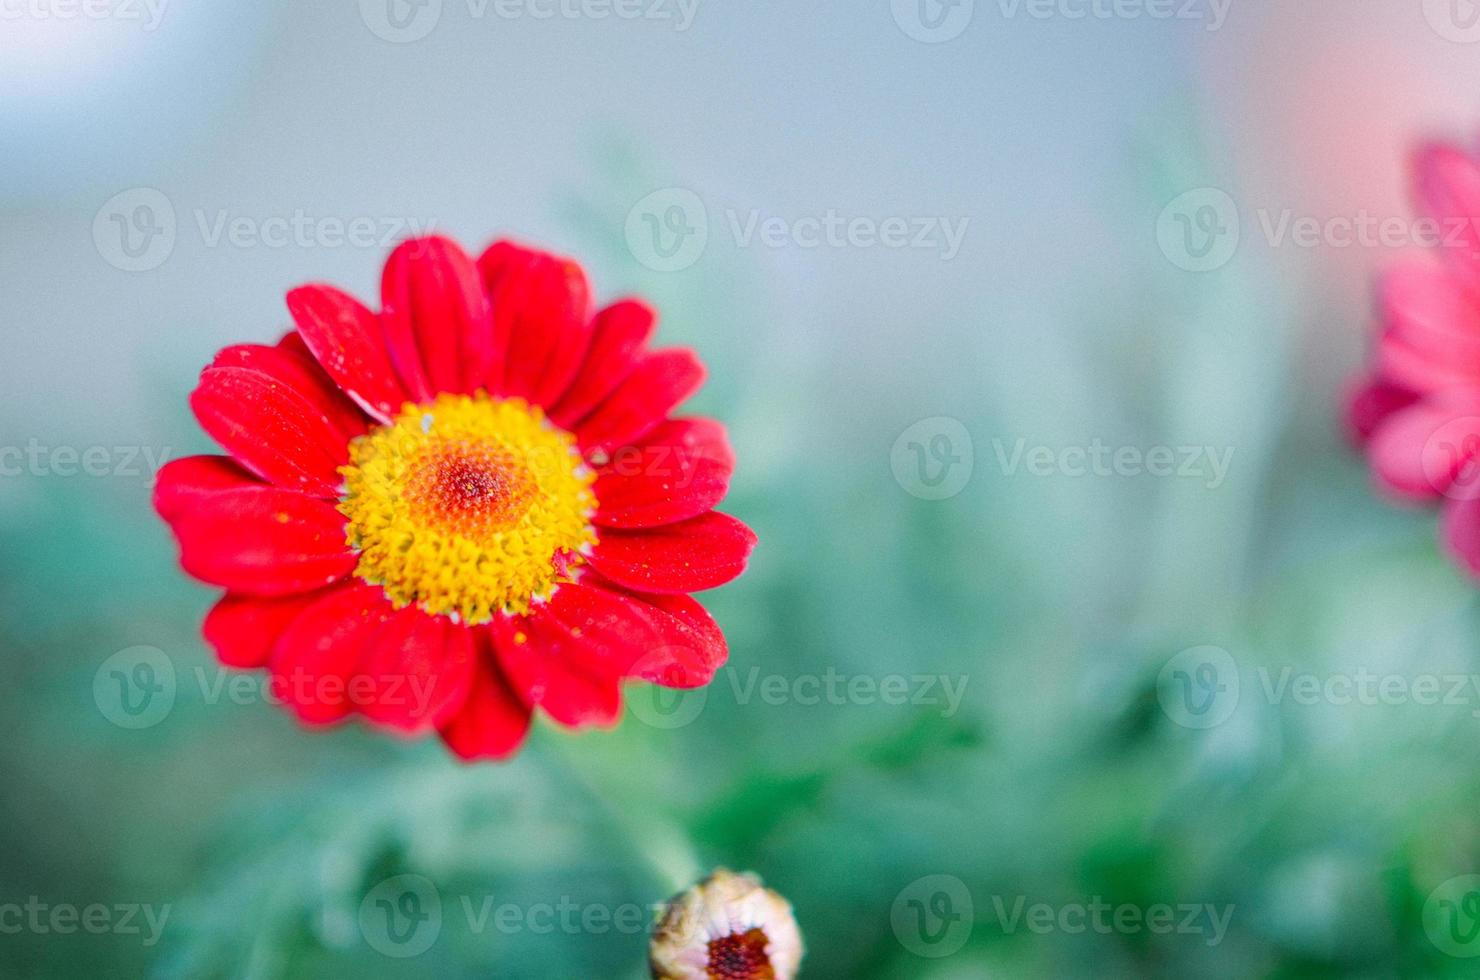 röd gazania trädgårdsväxt i blomma foto